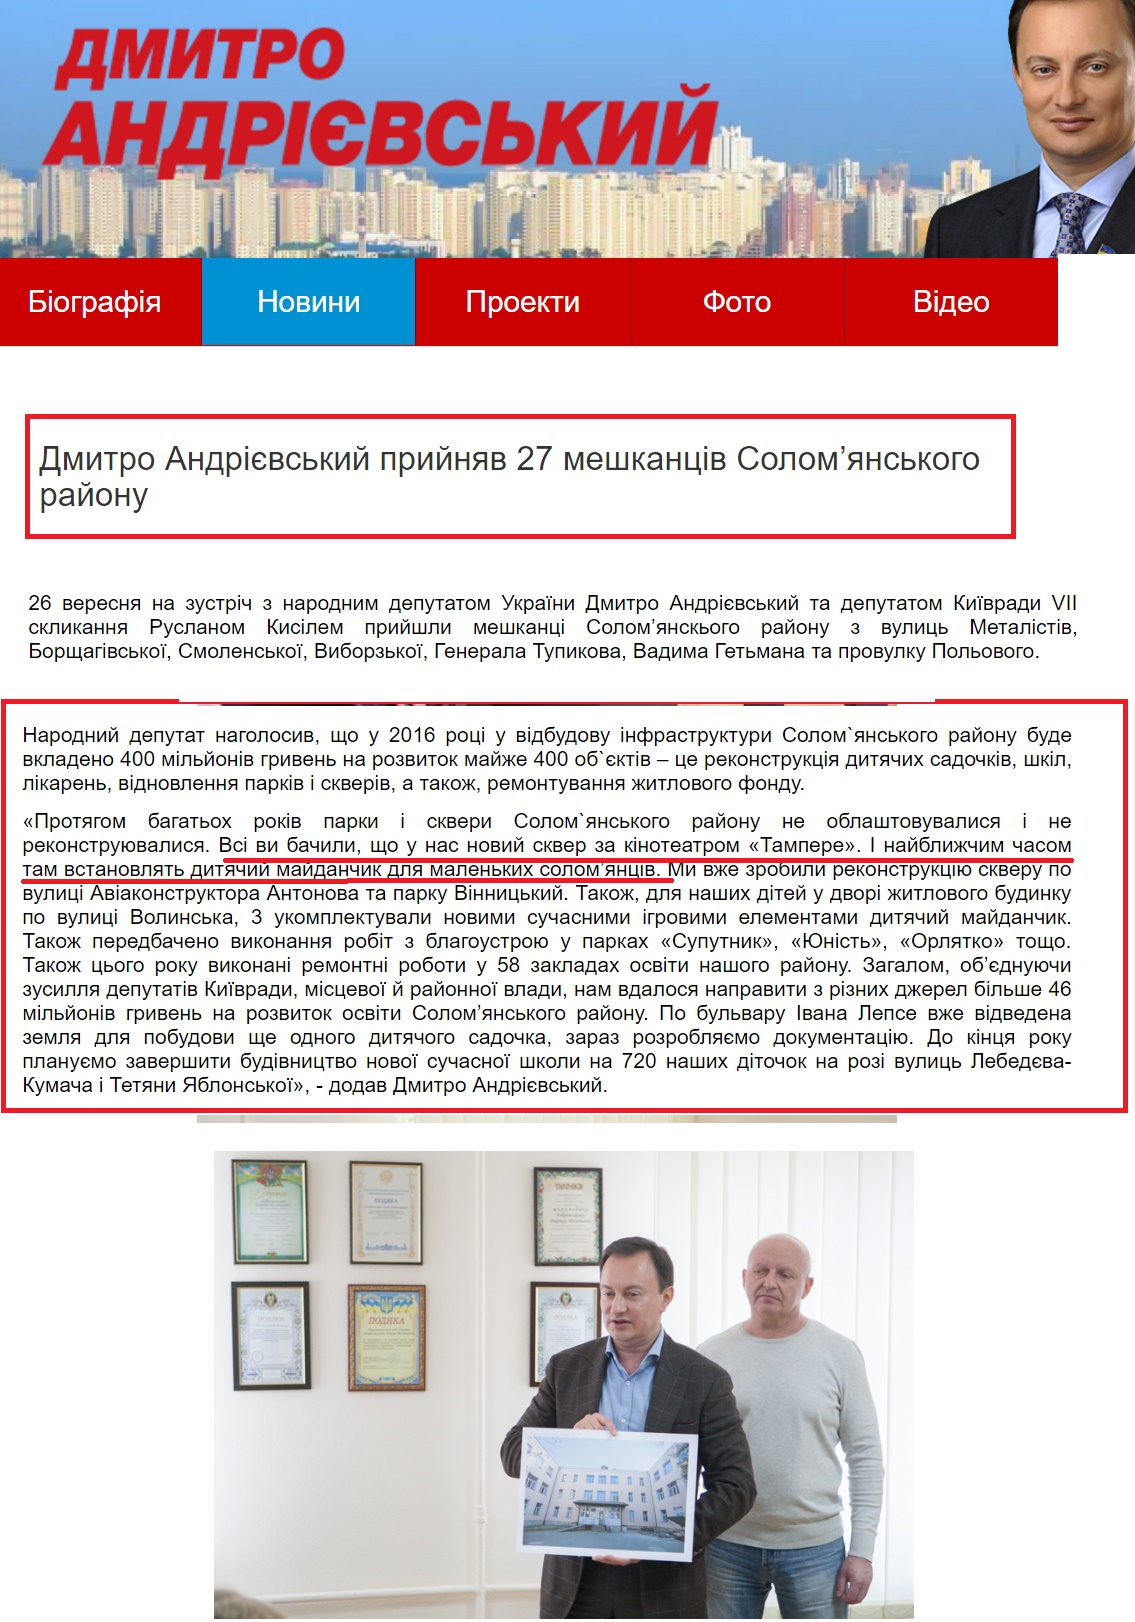 http://www.andrievsky.kiev.ua/news/dmitro-andr-vskii-priiniav-27-meshkantc-v-solom-ianskogo-raionu